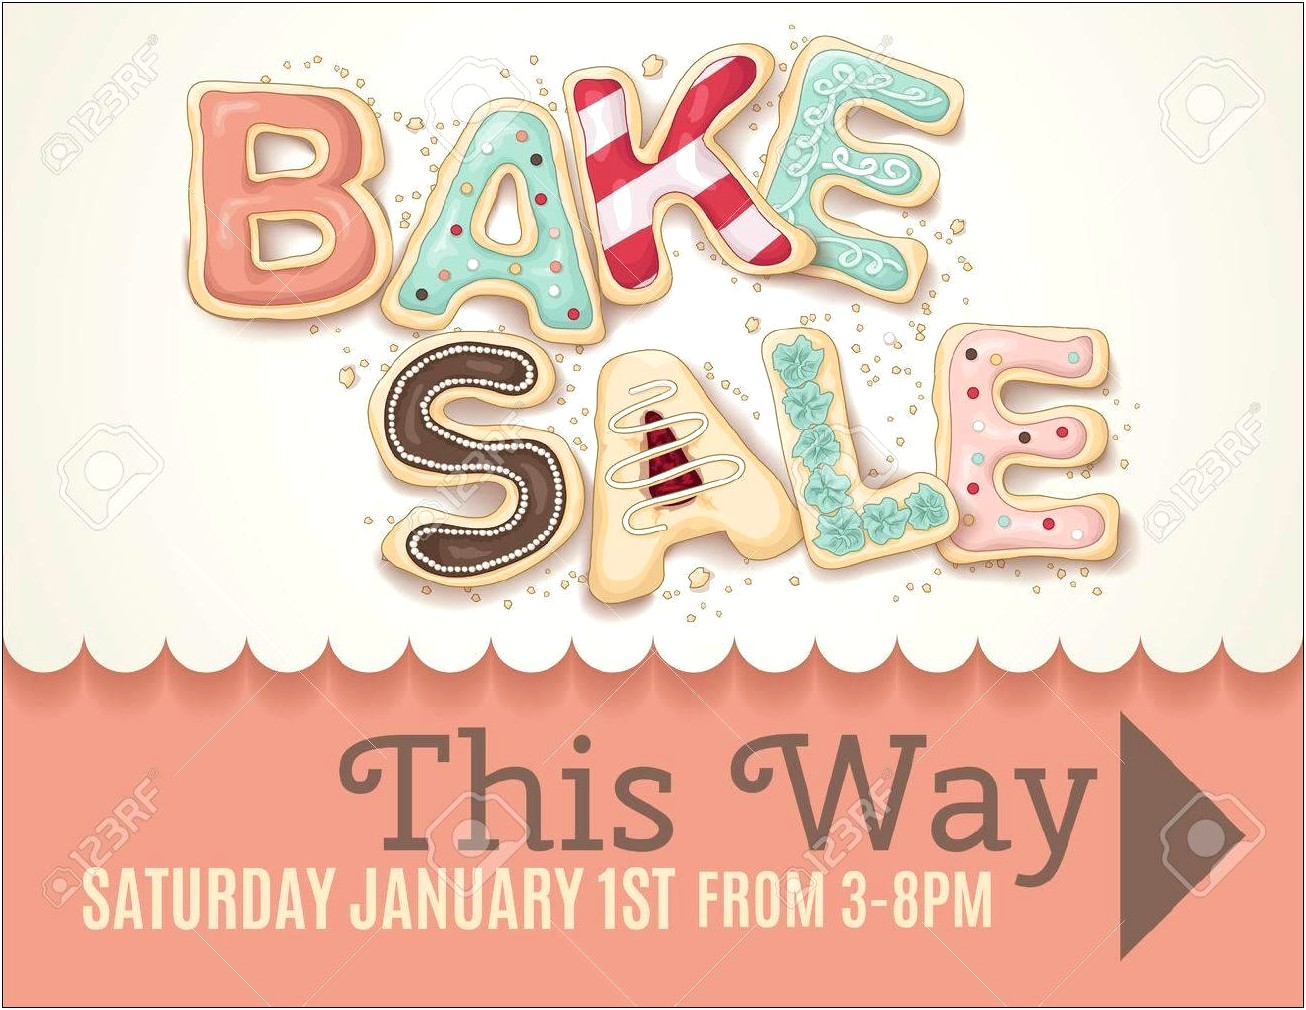 Free Bake Sale Fundraiser Flyer Template